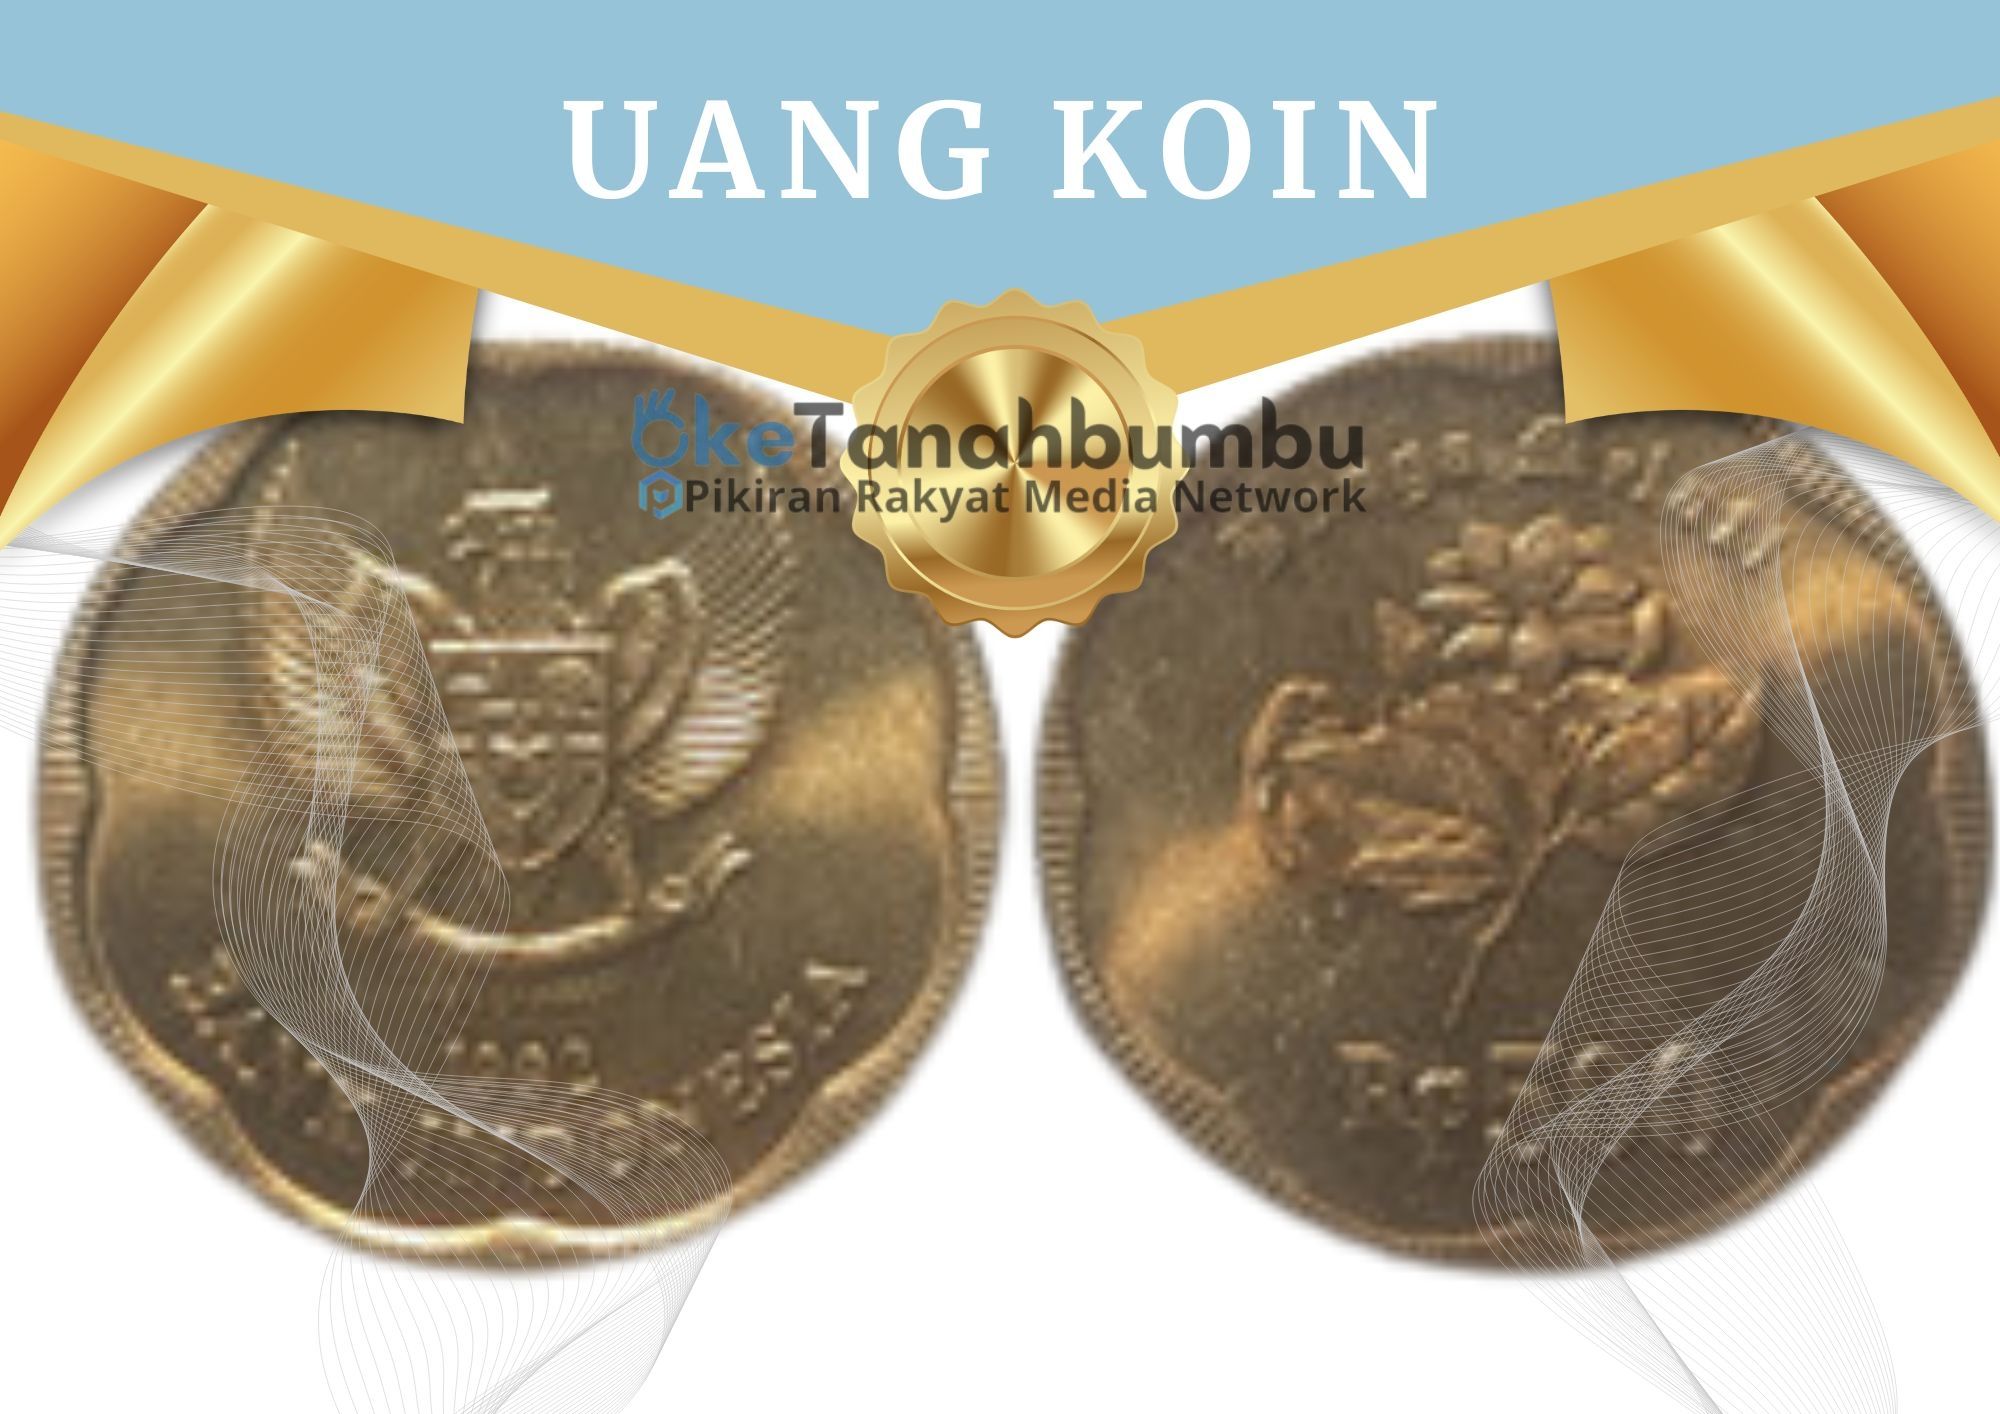 Uang koin Rp 500 Tahun Emisi 1992 